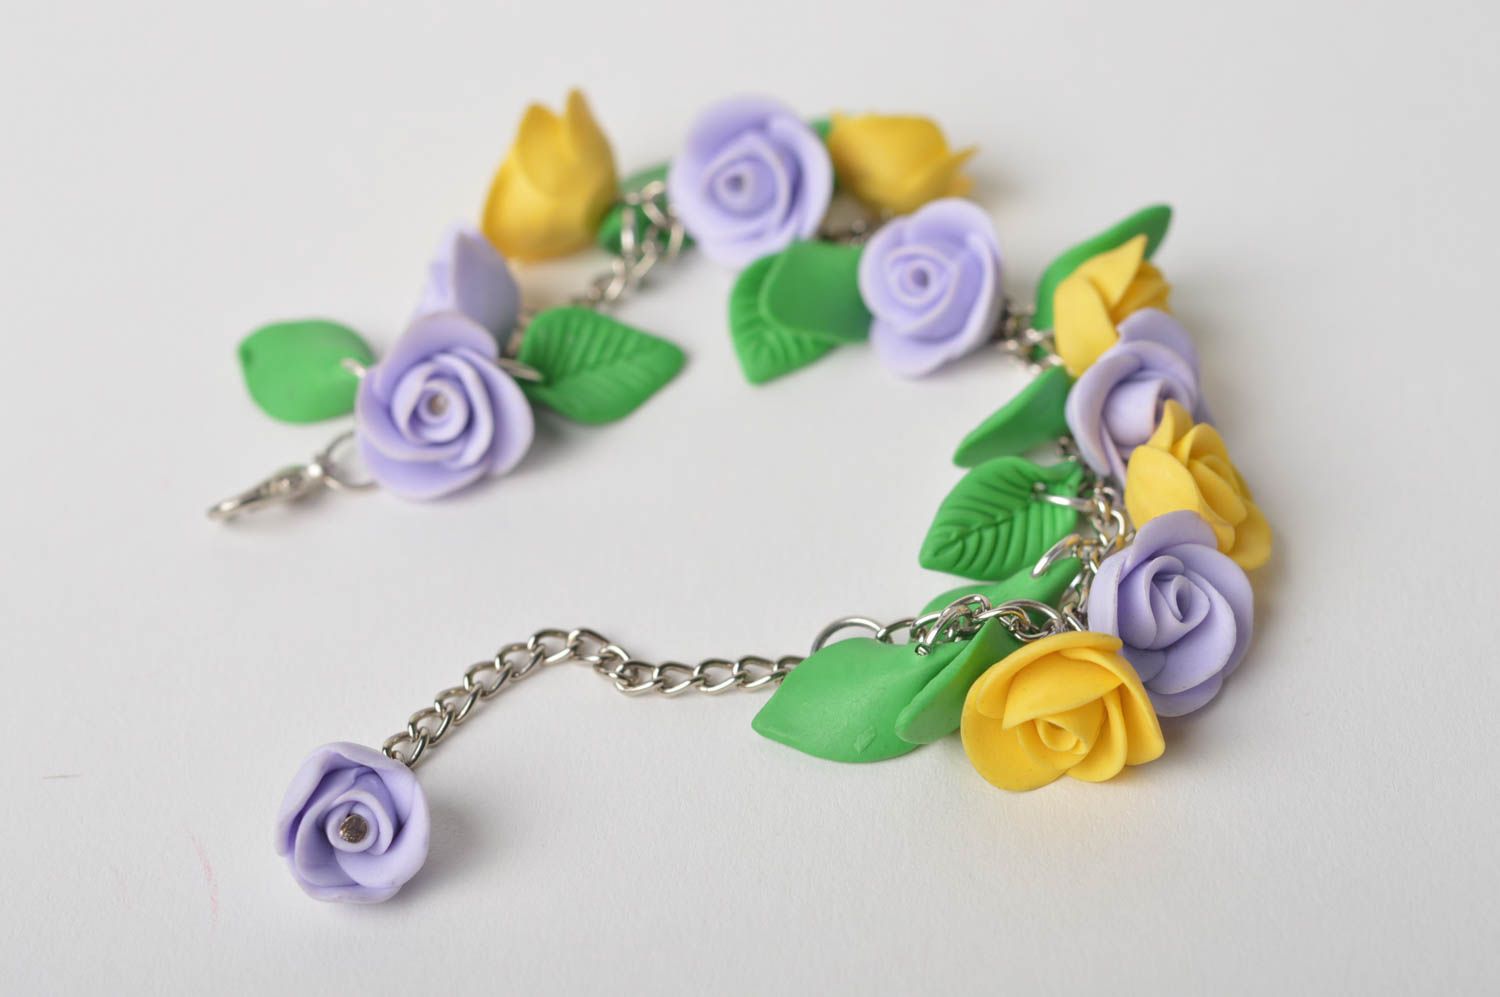 Stylish handmade plastic pendant charm jewelry designs accessories for girls photo 5